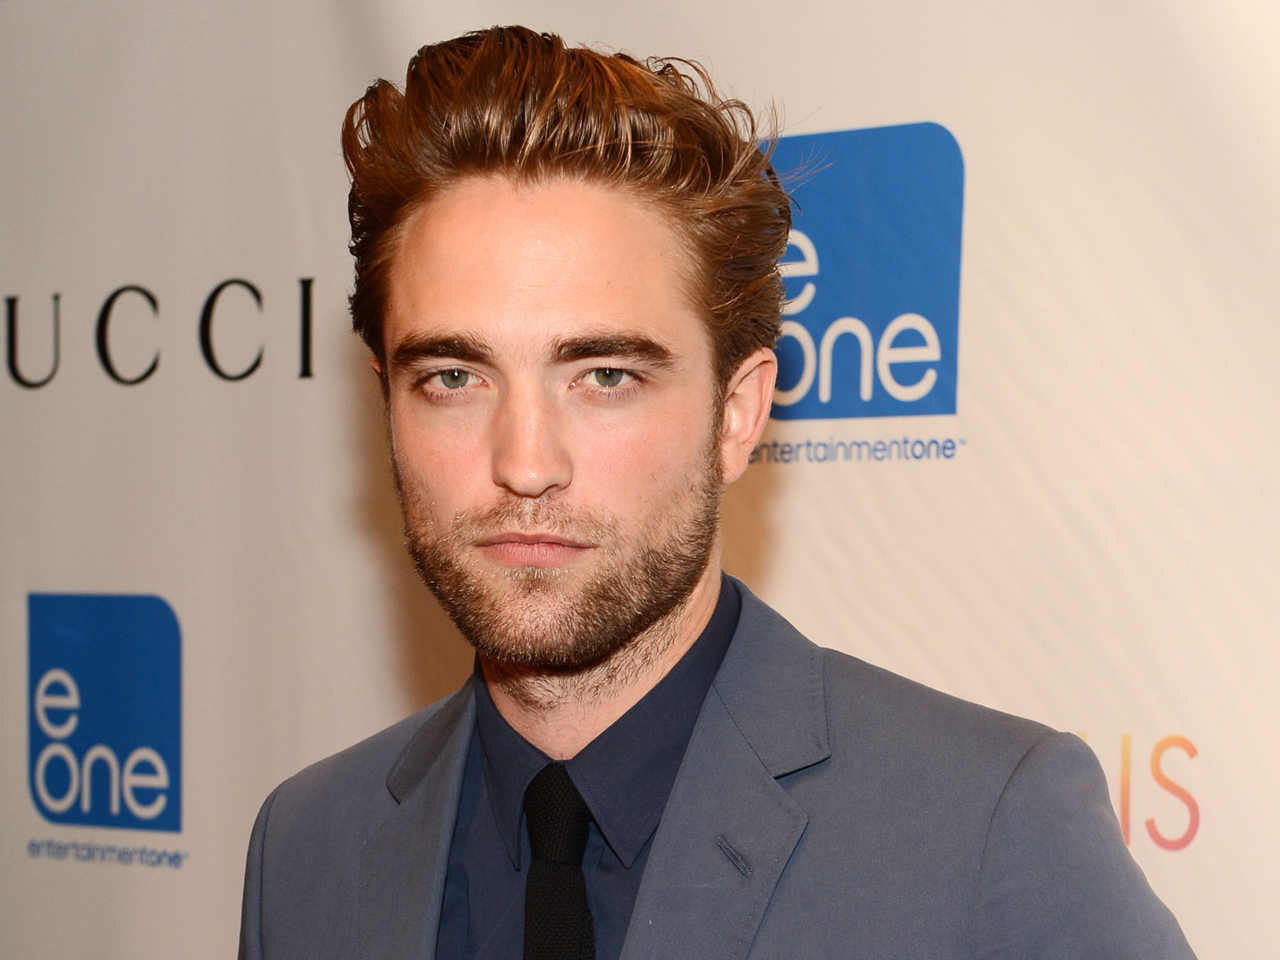 Robert Pattinson to appear at MTV Video Music Awards - CBS News